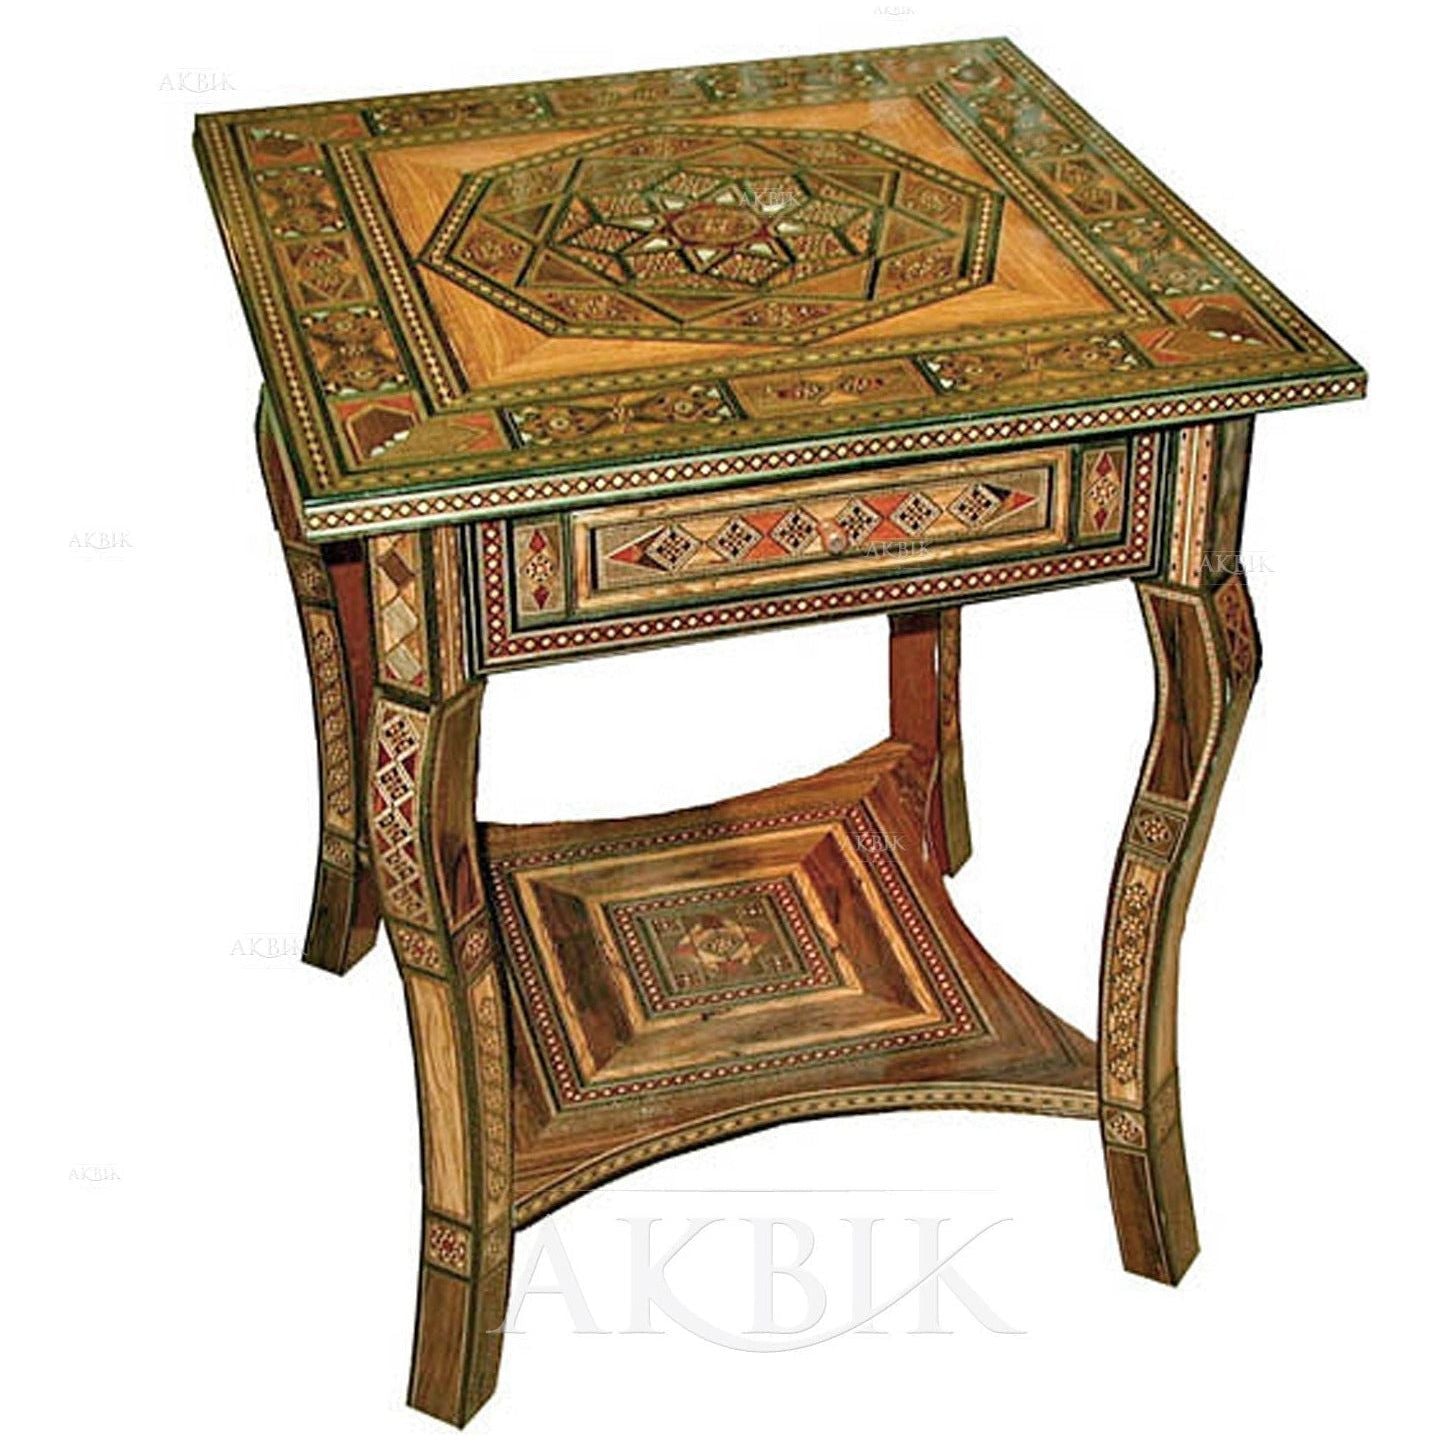 BELLA VISTA TABLE - AKBIK Furniture & Design